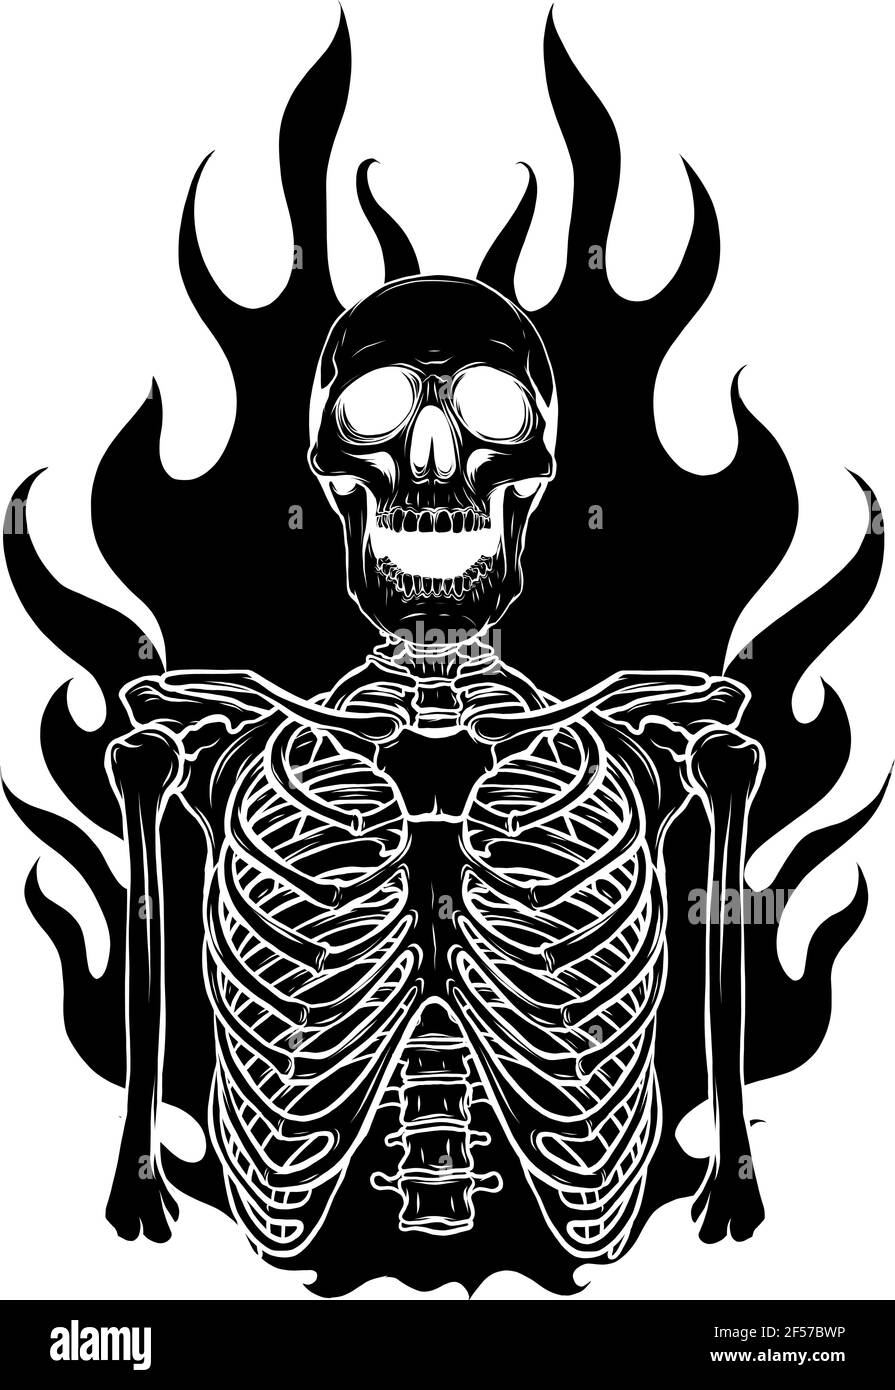 black silhouette of vector illustration of skeleton in flame design Stock Vector